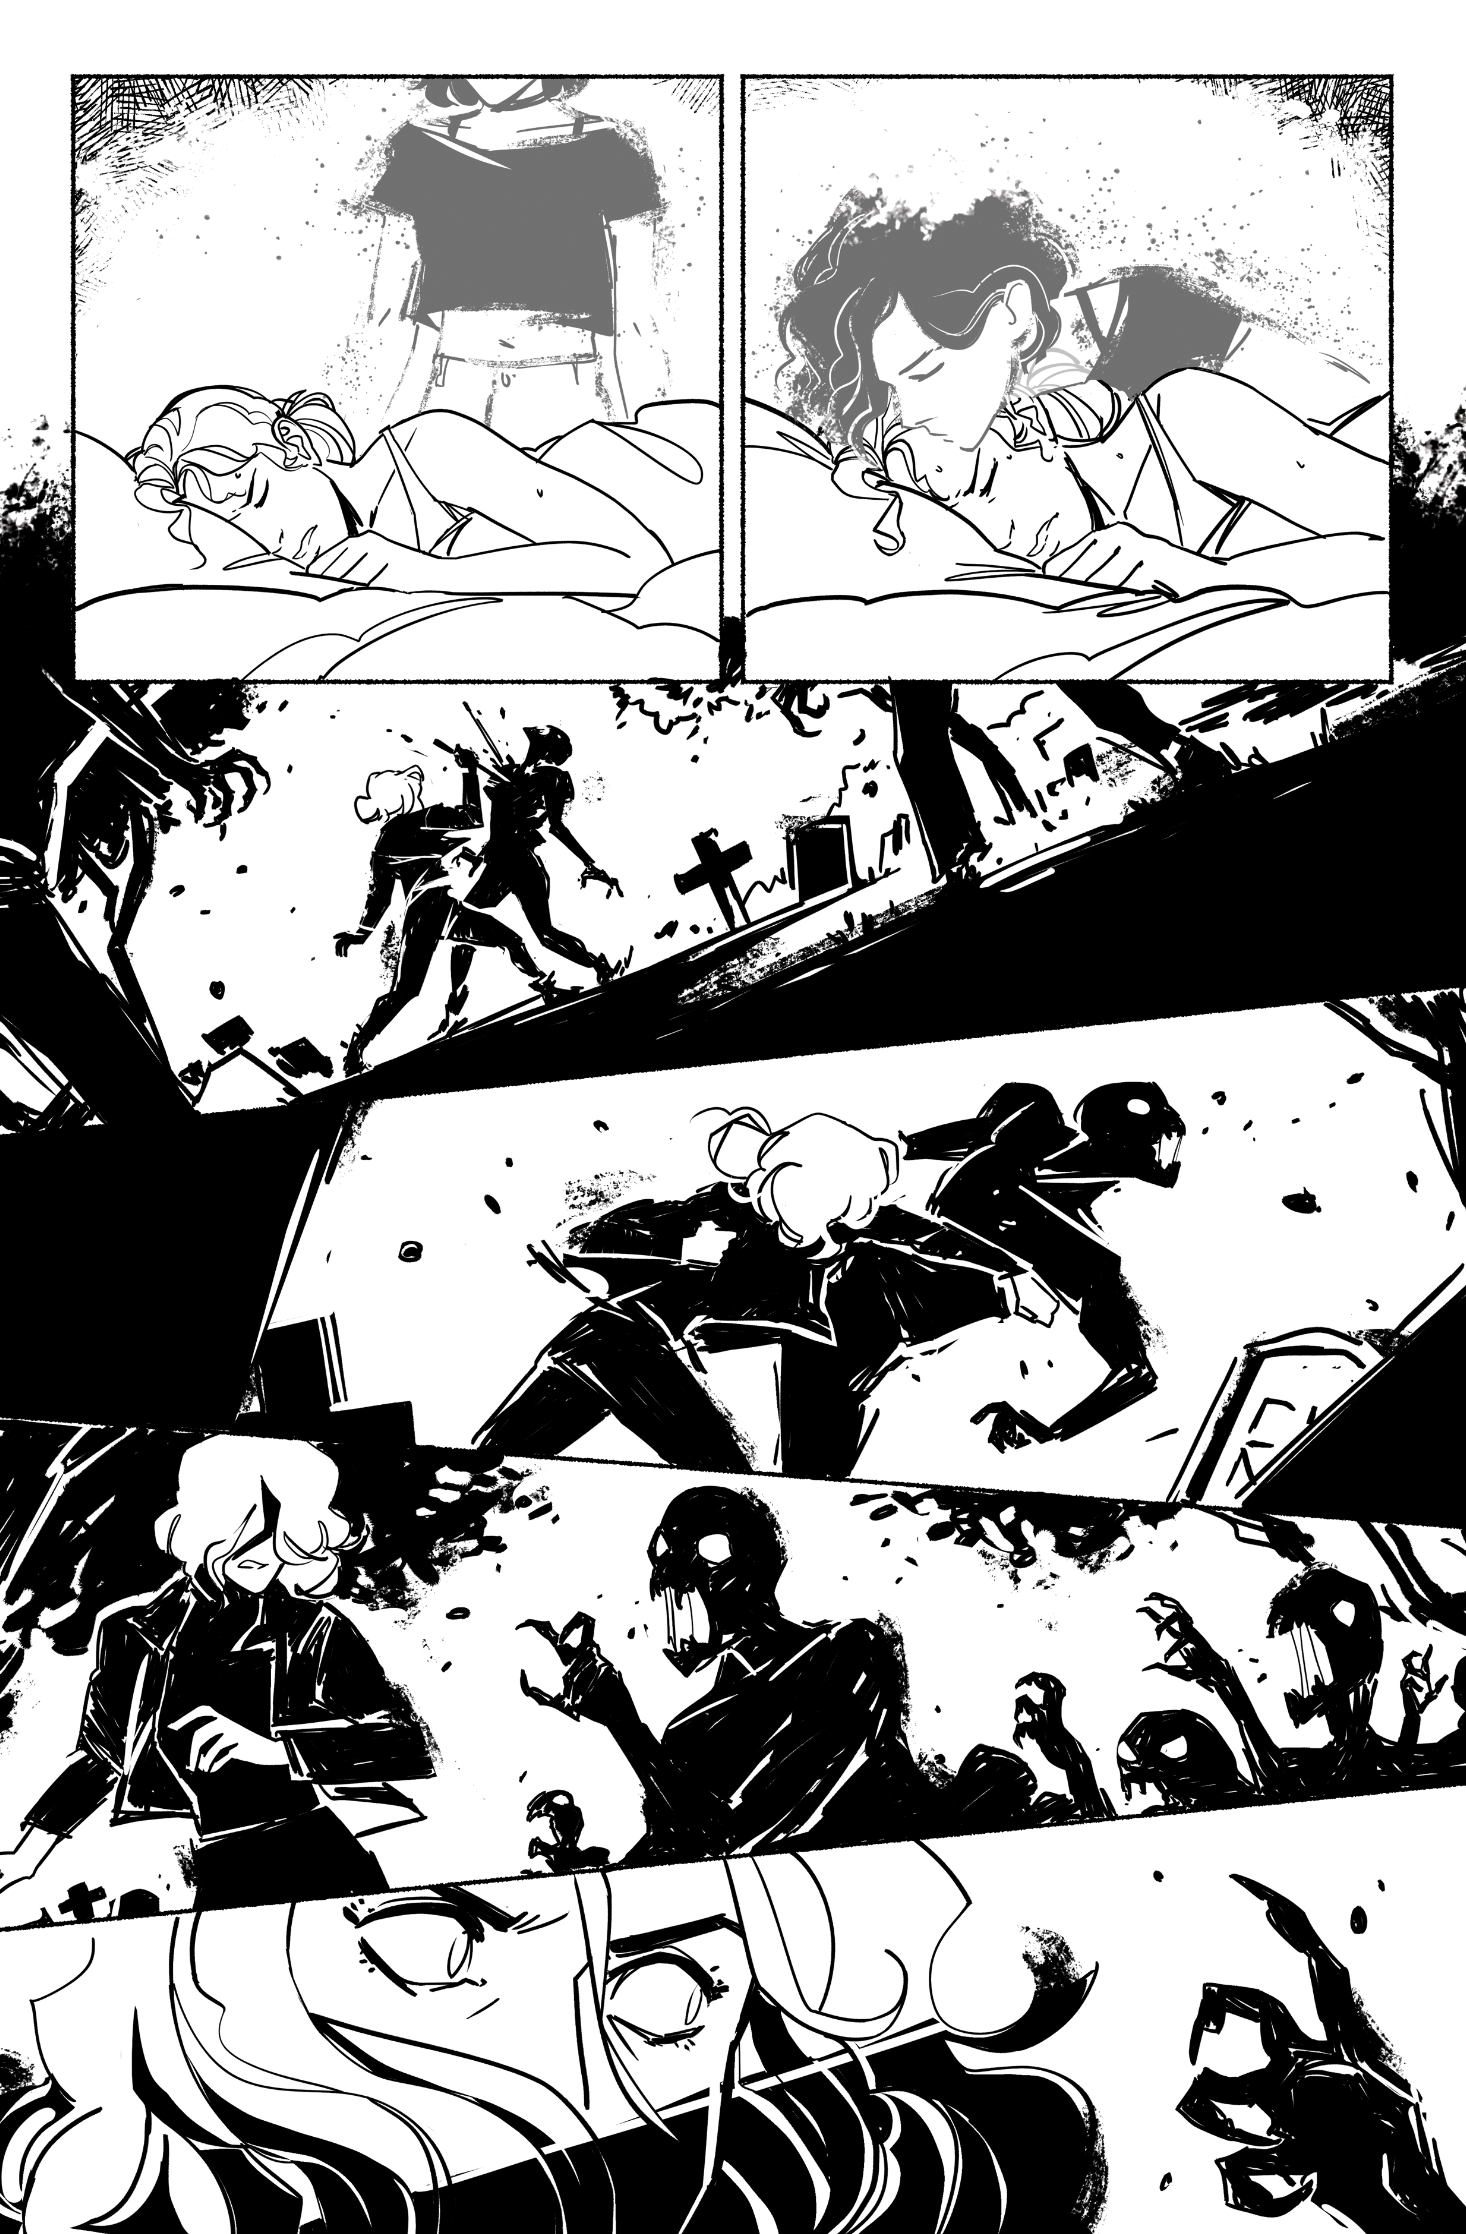  Page 11 - Vampire Slayer #10 - BOOM! Studios    Writer: Sarah Gailey Art: Hannah Templer 